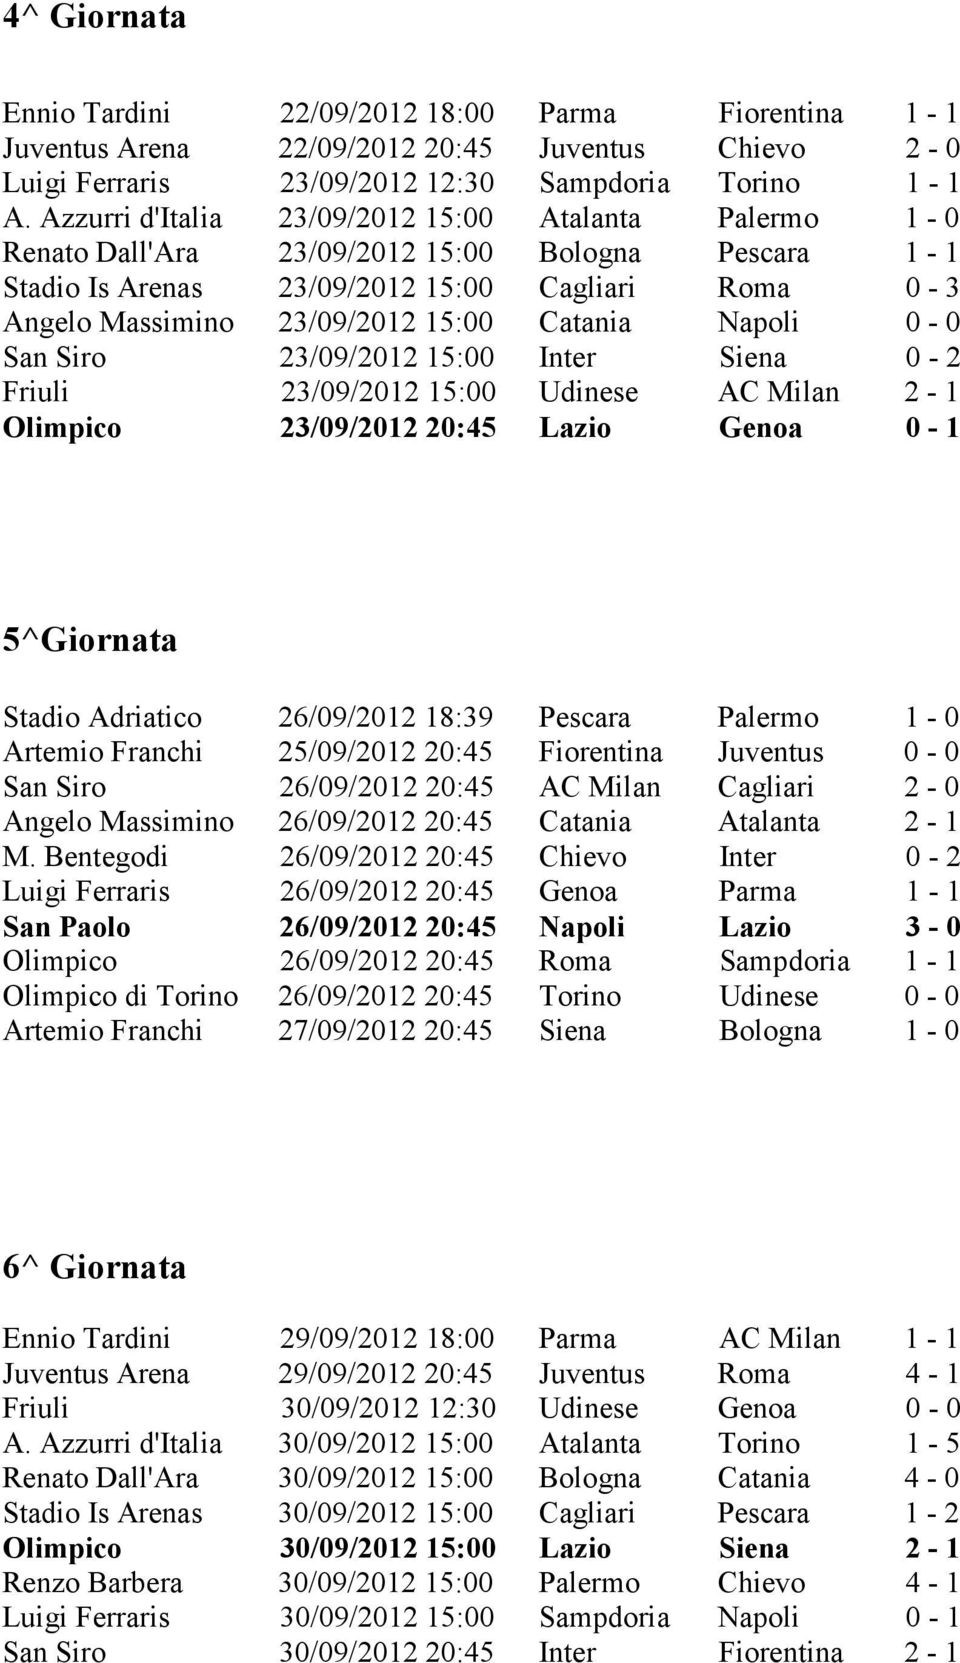 Catania Napoli 0-0 San Siro 23/09/2012 15:00 Inter Siena 0-2 Friuli 23/09/2012 15:00 Udinese AC Milan 2-1 Olimpico 23/09/2012 20:45 Lazio Genoa 0-1 5^Giornata Stadio Adriatico 26/09/2012 18:39